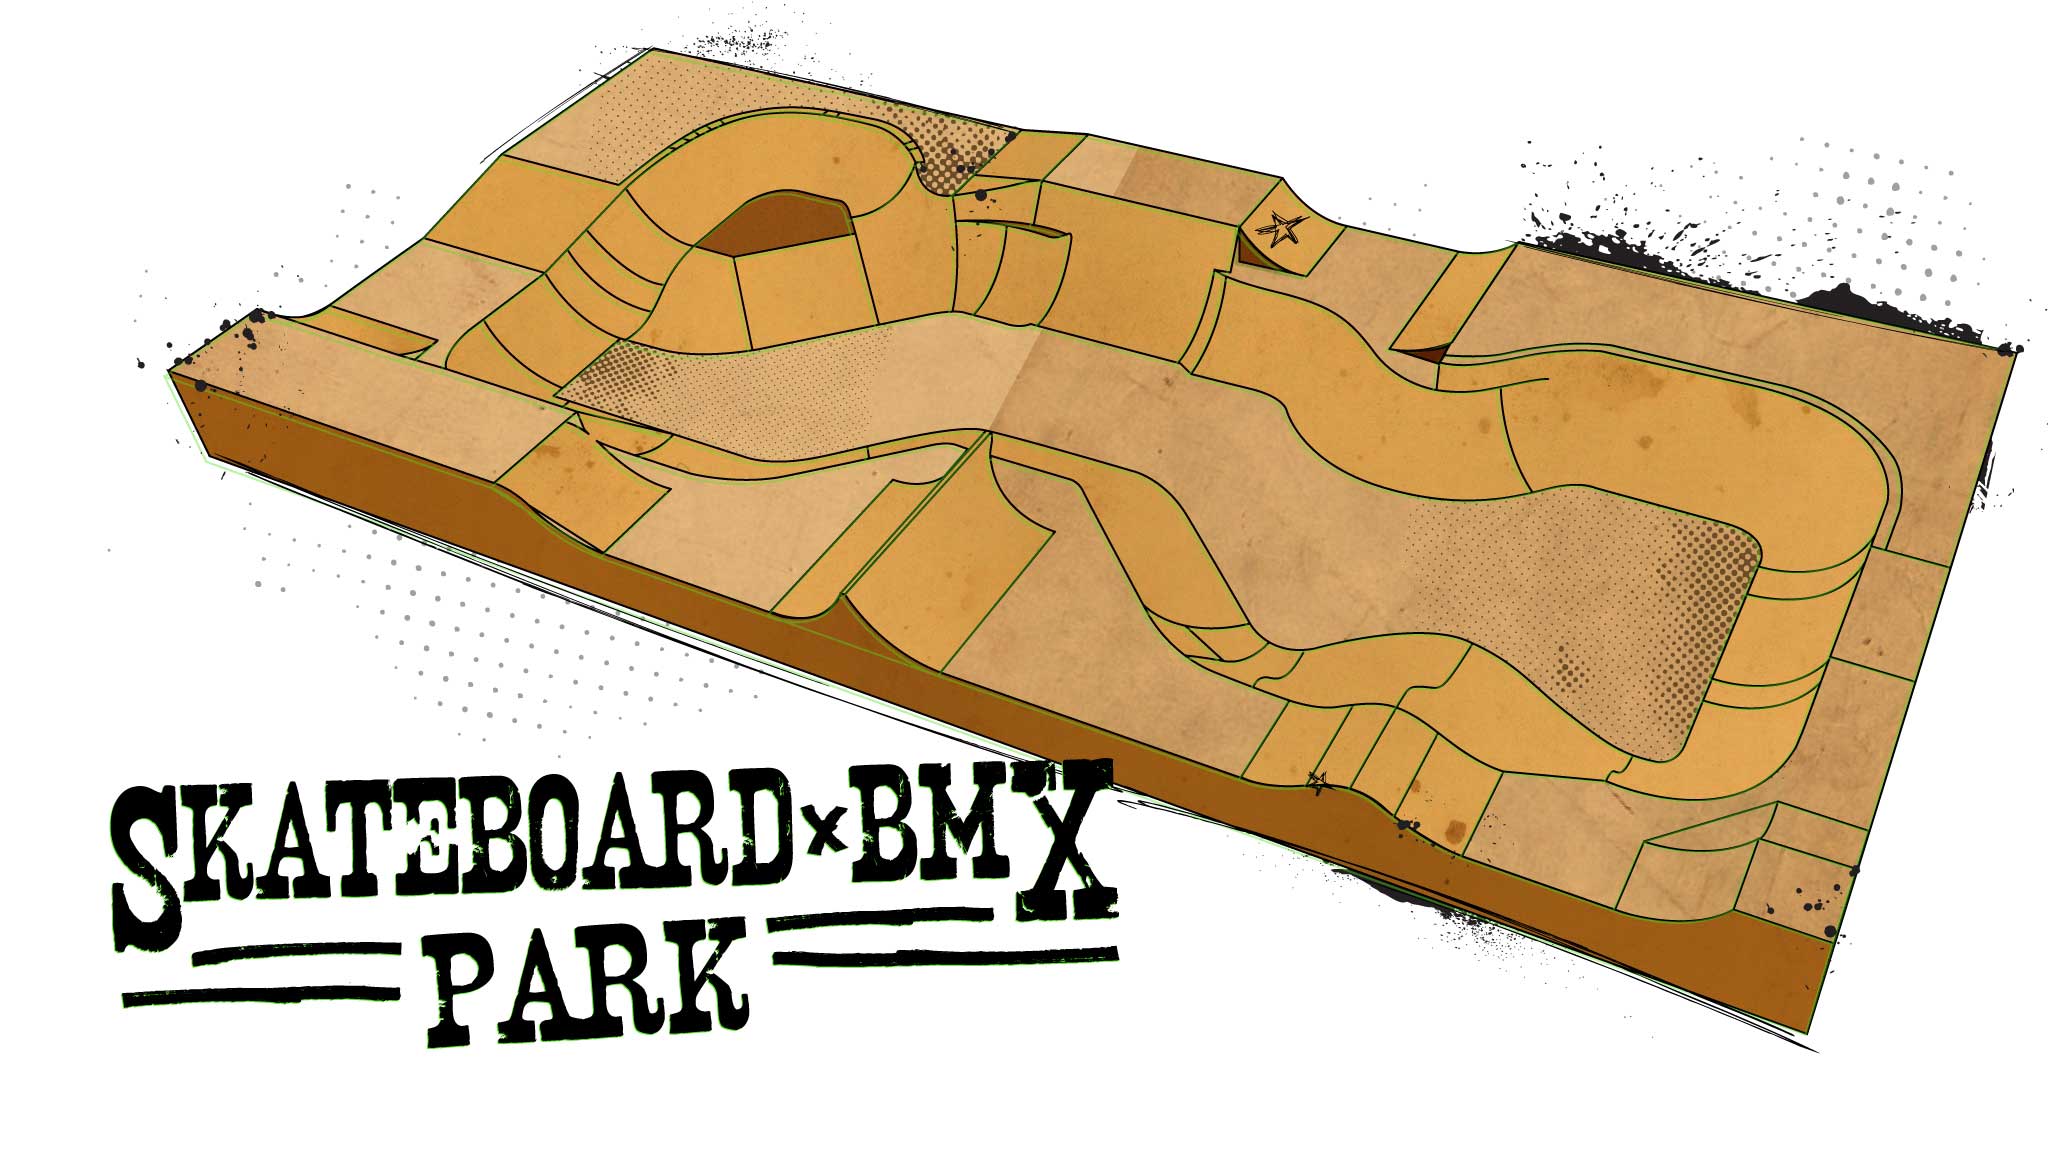 Skateboard and BMX Park